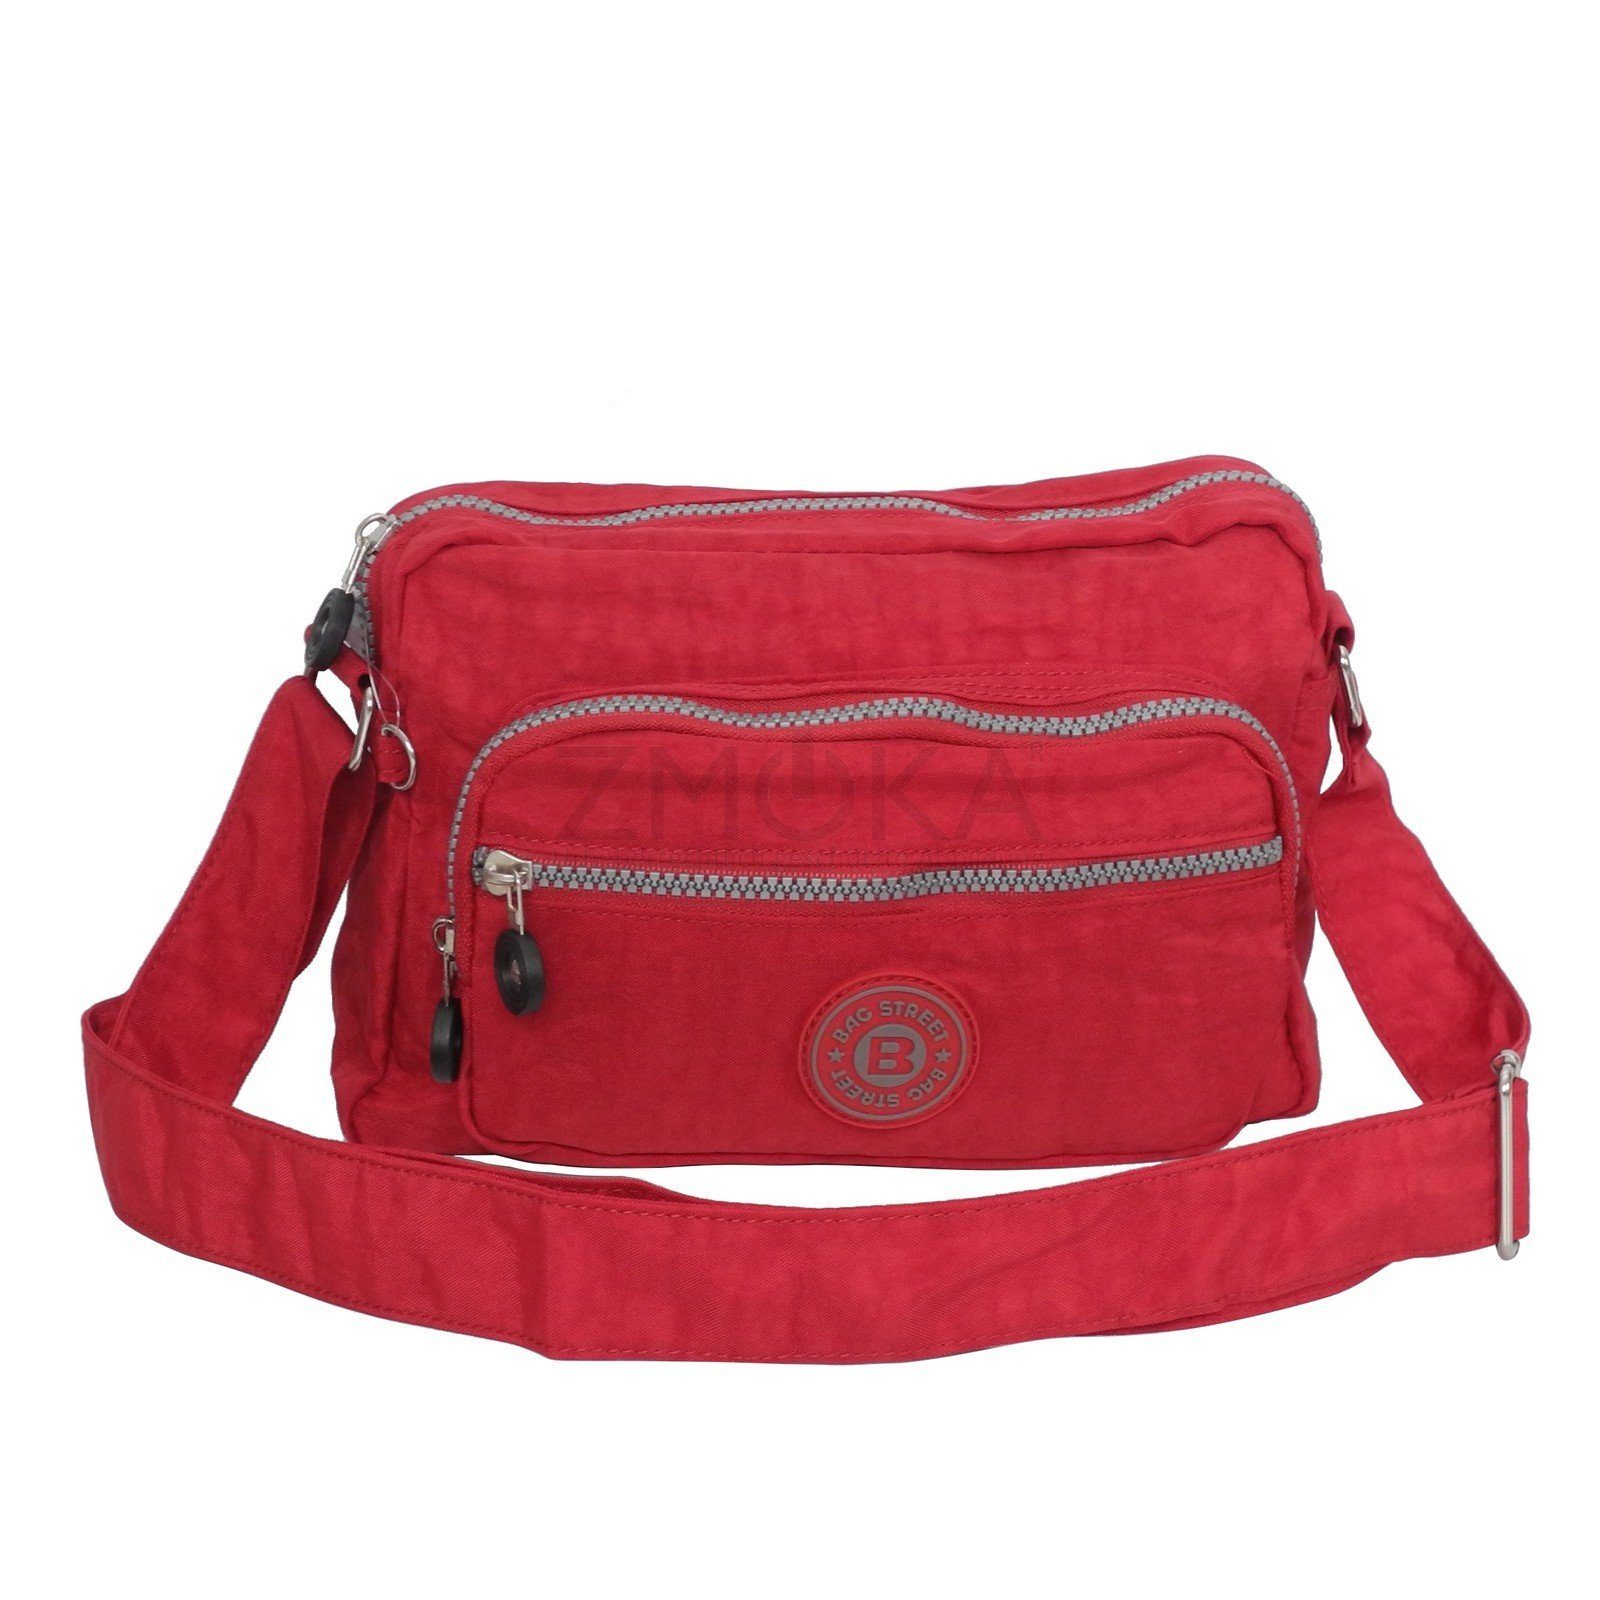 BAG STREET Umhängetasche Bag Street - Crossbody Bag Stofftasche Umhängetasche Auswahl Rot